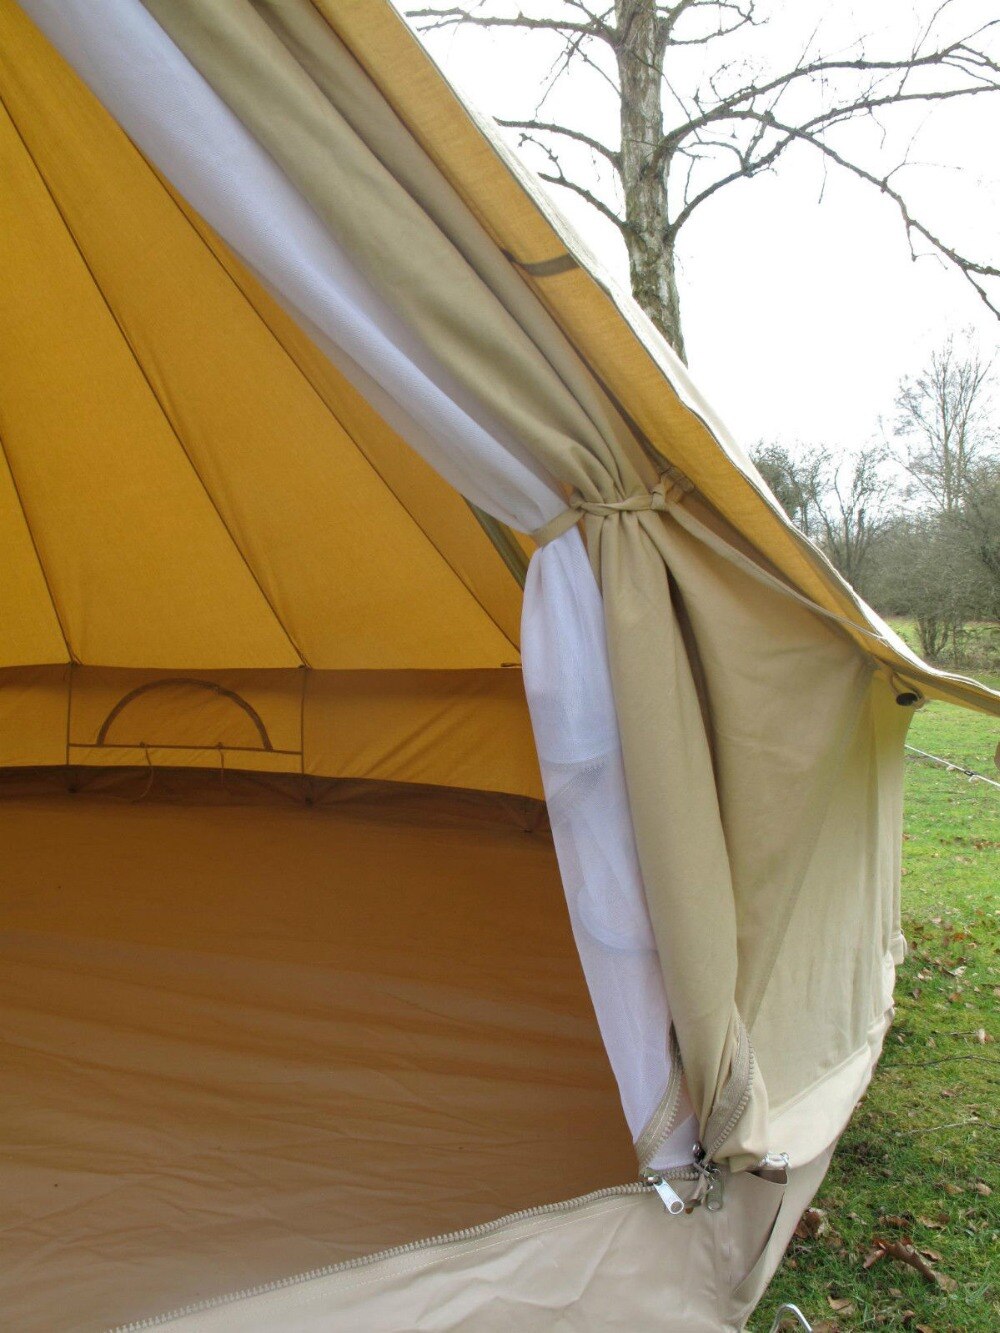 DANCHEL 4M Diameter Canvas Bell Tent Outdoor All Season Sun Shade Travel  Waterproof 400 Ultimate Tent waterproof camping hiking